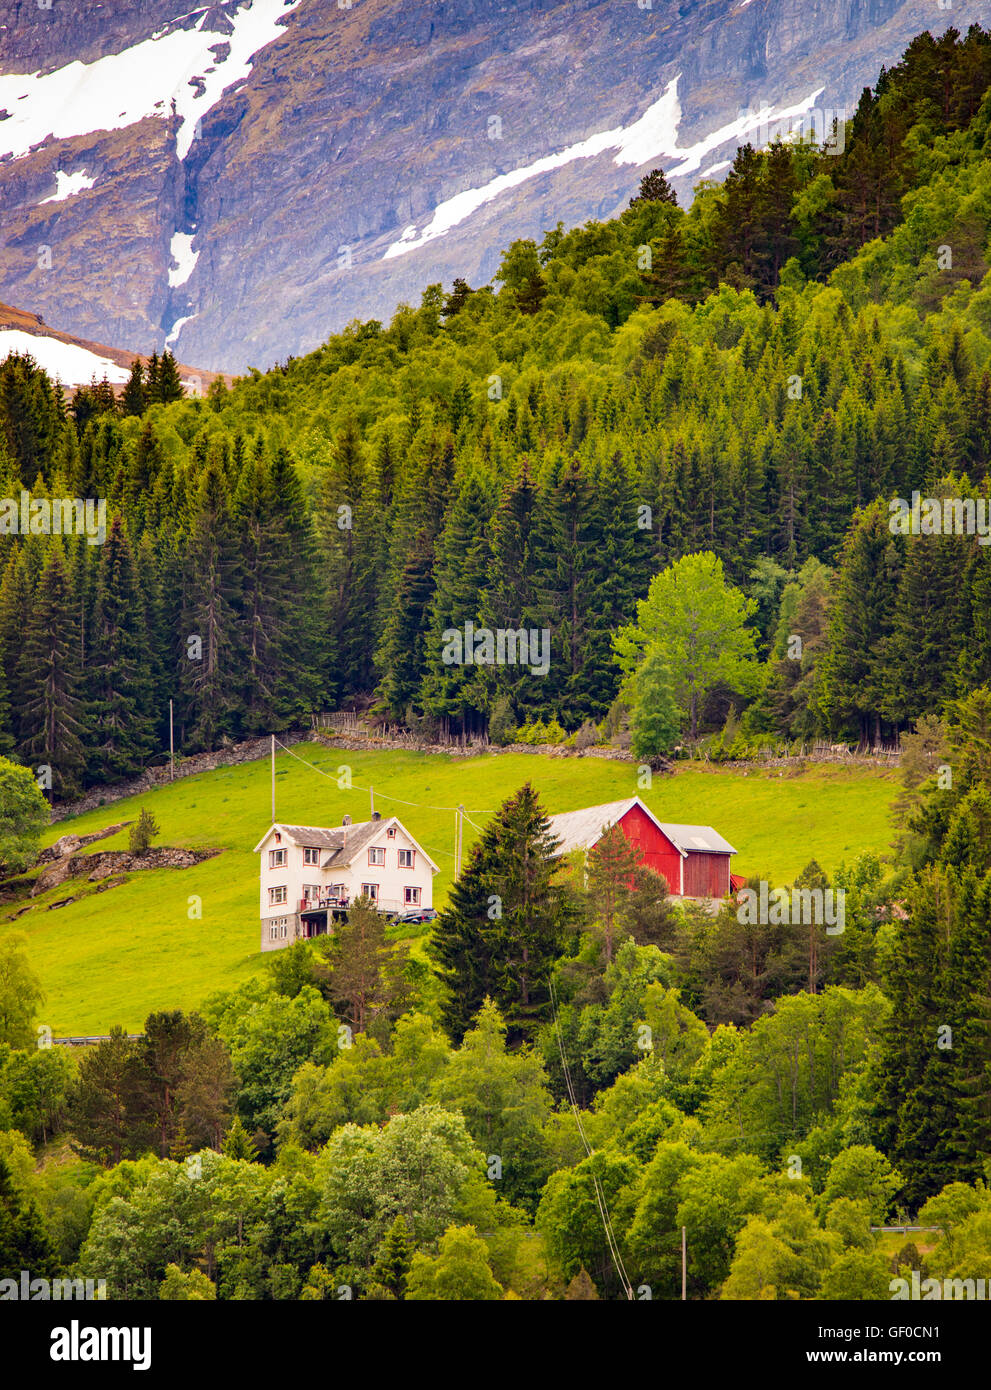 Farm nestled in mountain forest, Bergen, Norway, Scandinavia, European Stock Photo